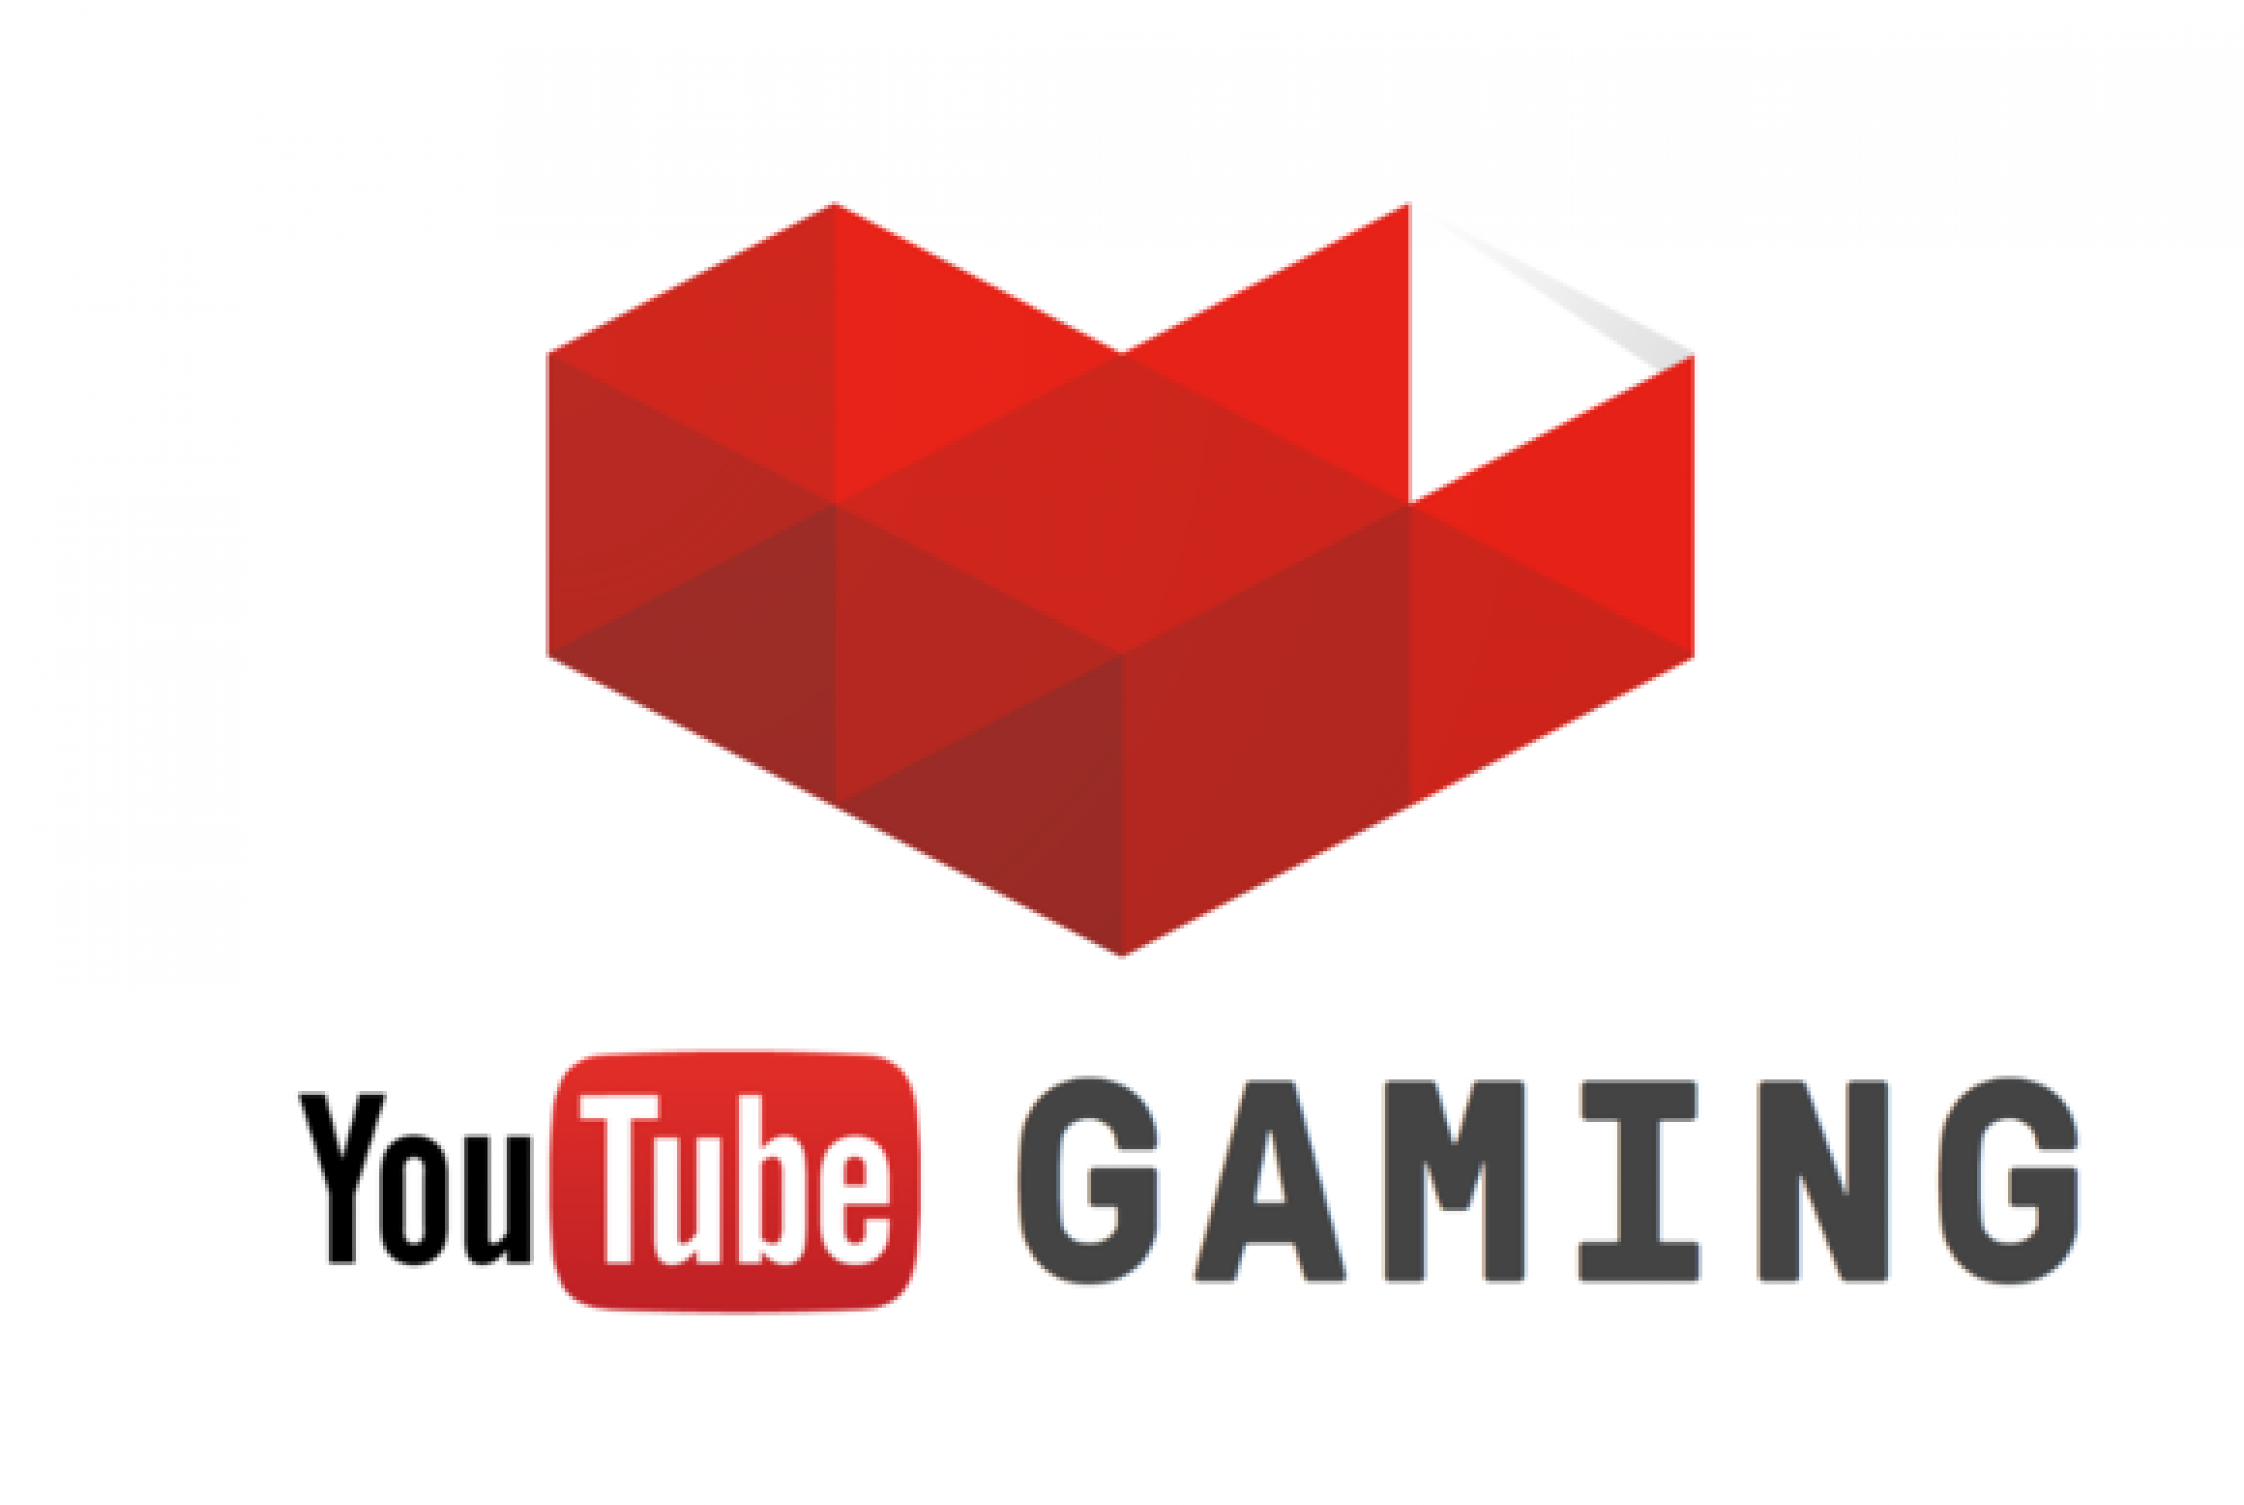 youtube gaming logo maker free online